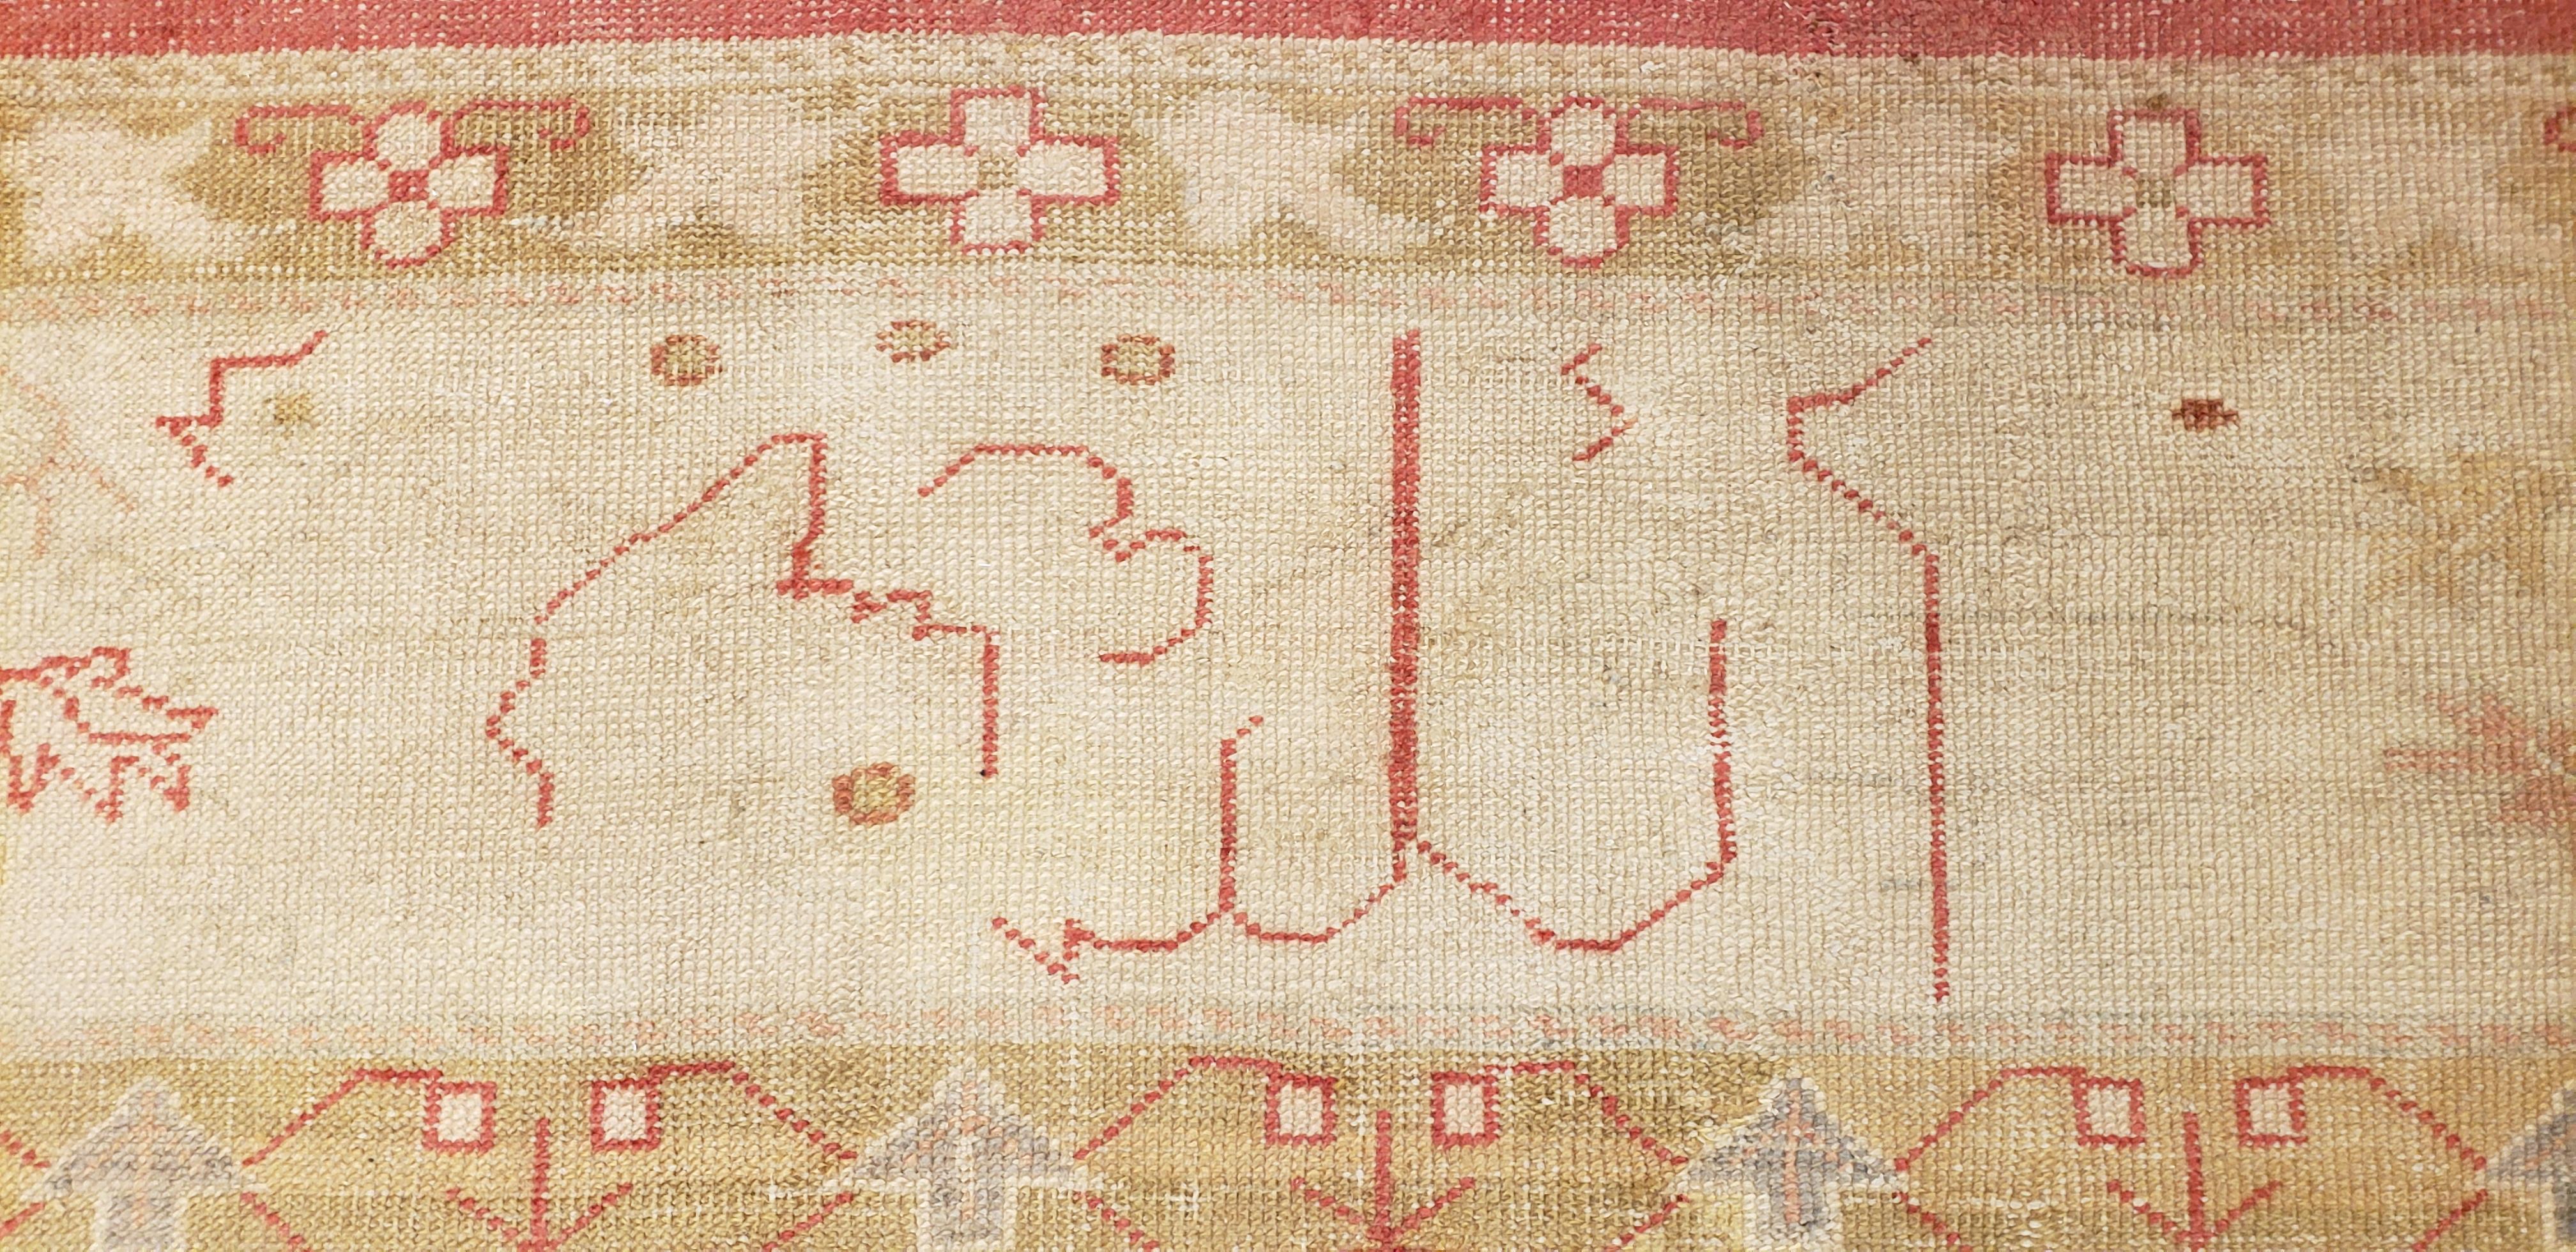 Antique Oushak Carpet, Handmade Turkish Oriental Rug, Beige, Coral, Soft Colors For Sale 4